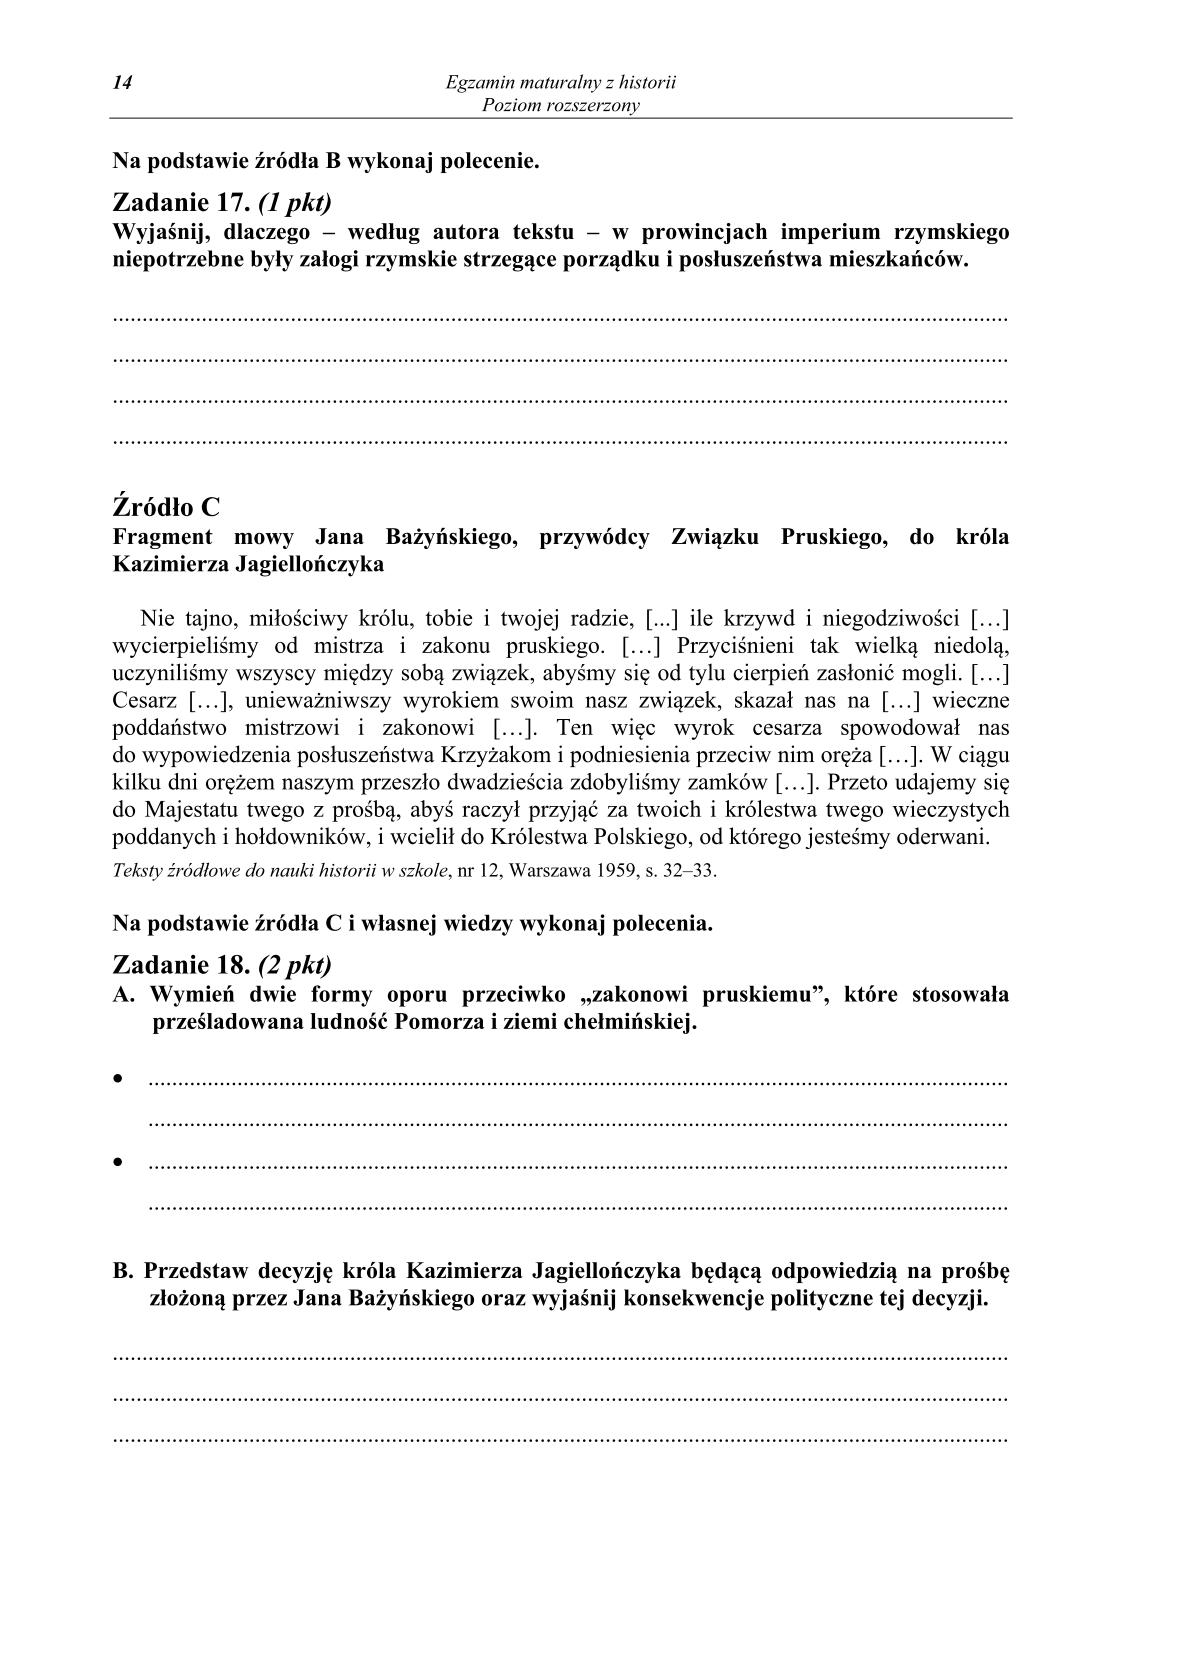 pytania-historia-poziom-rozszerzony-matura-2014-str.14